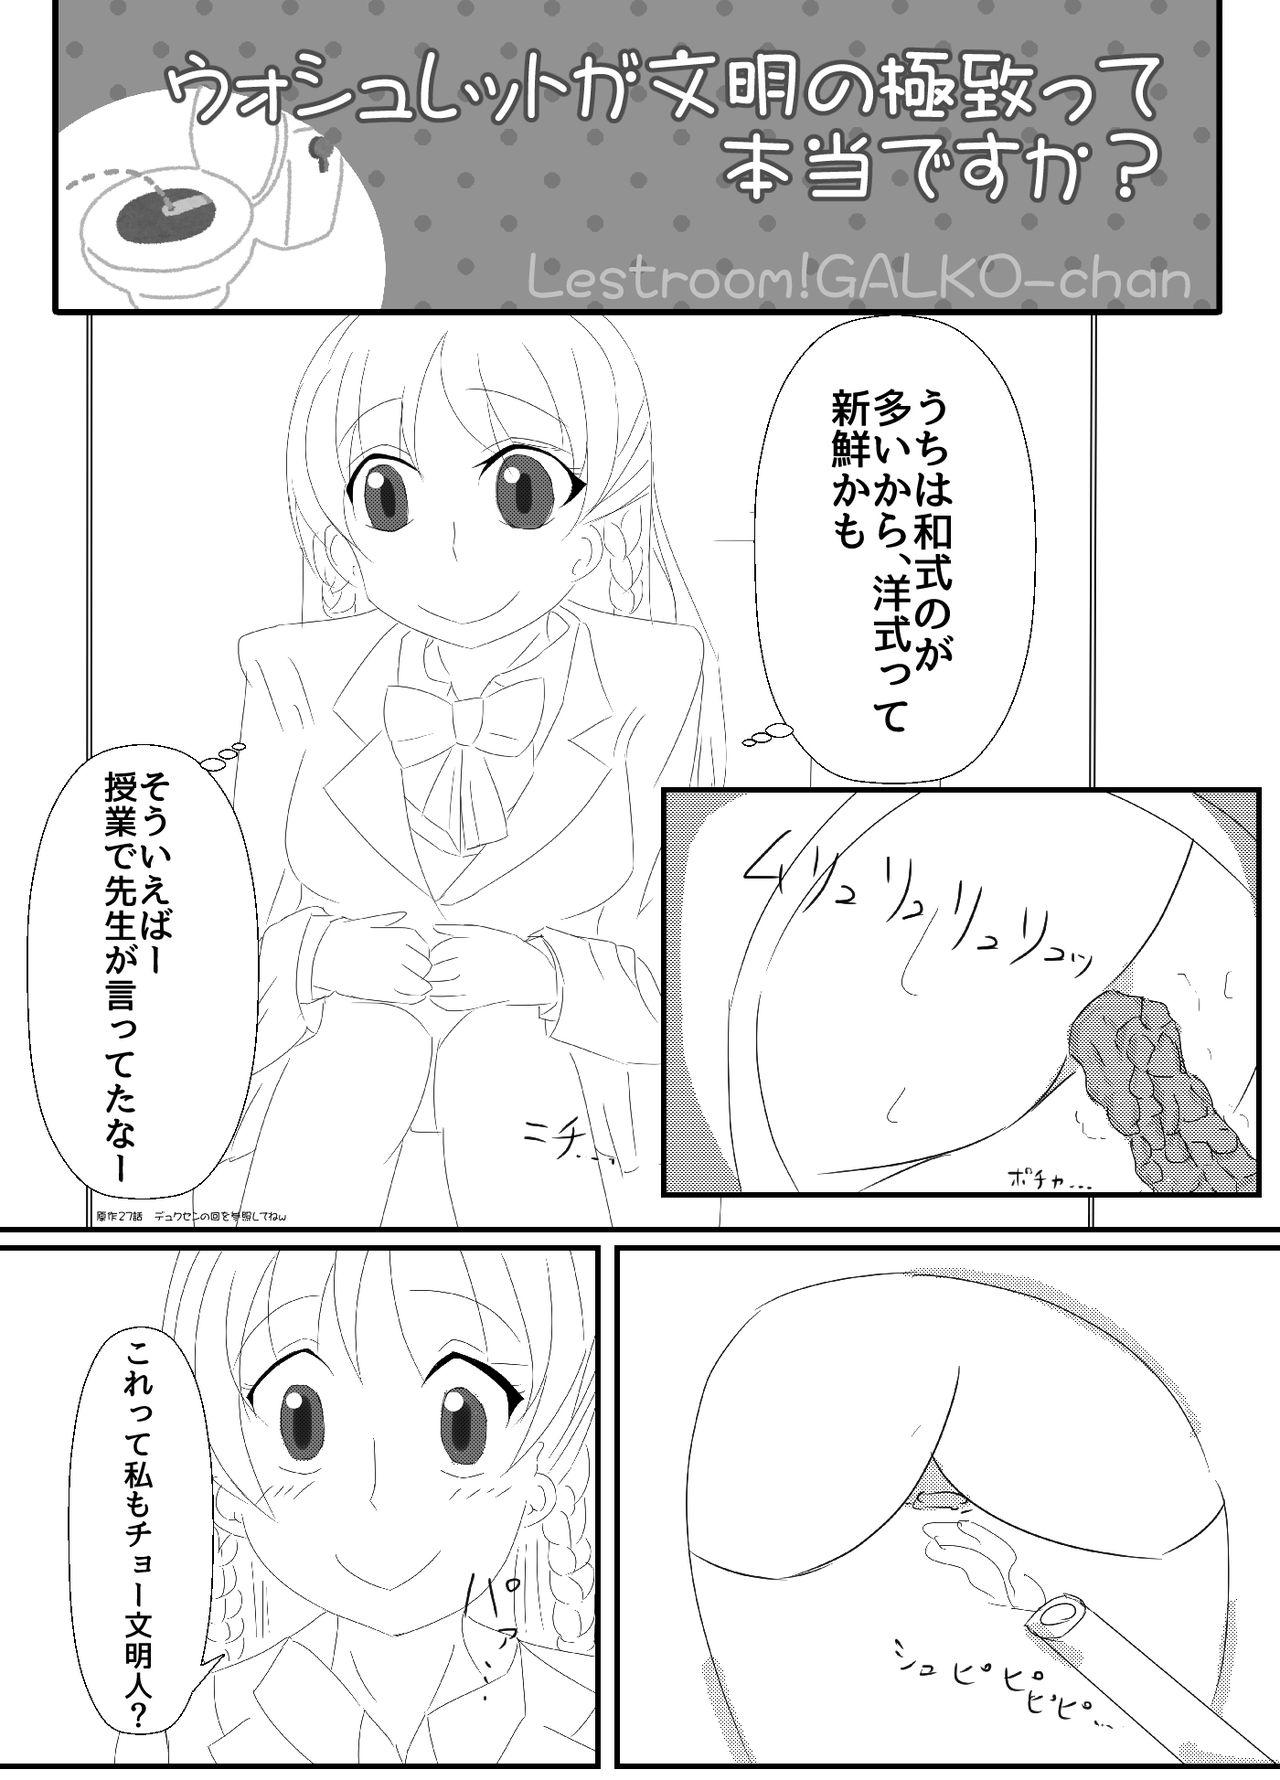 Piercings Otoile! Galko-chan - Oshiete galko-chan Pinoy - Page 8